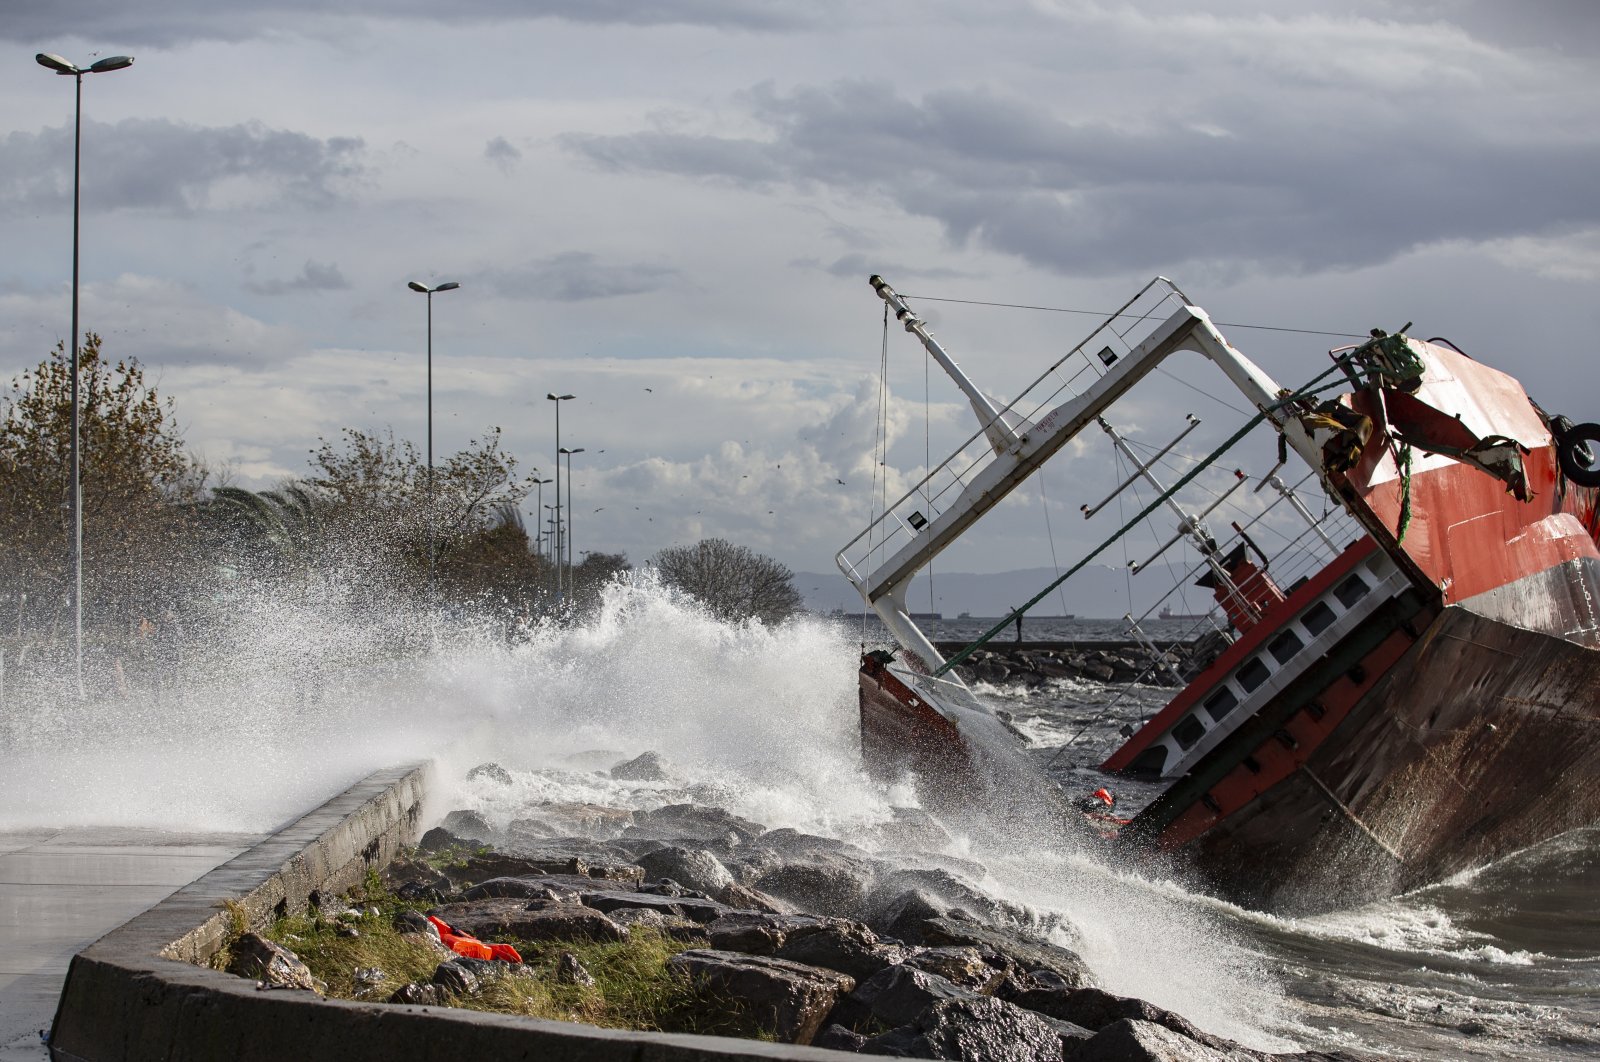 A view of a cargo ship damaged by a storm near the Bosporus in Istanbul, Turkey, Nov. 30, 2021. (EPA Photo)